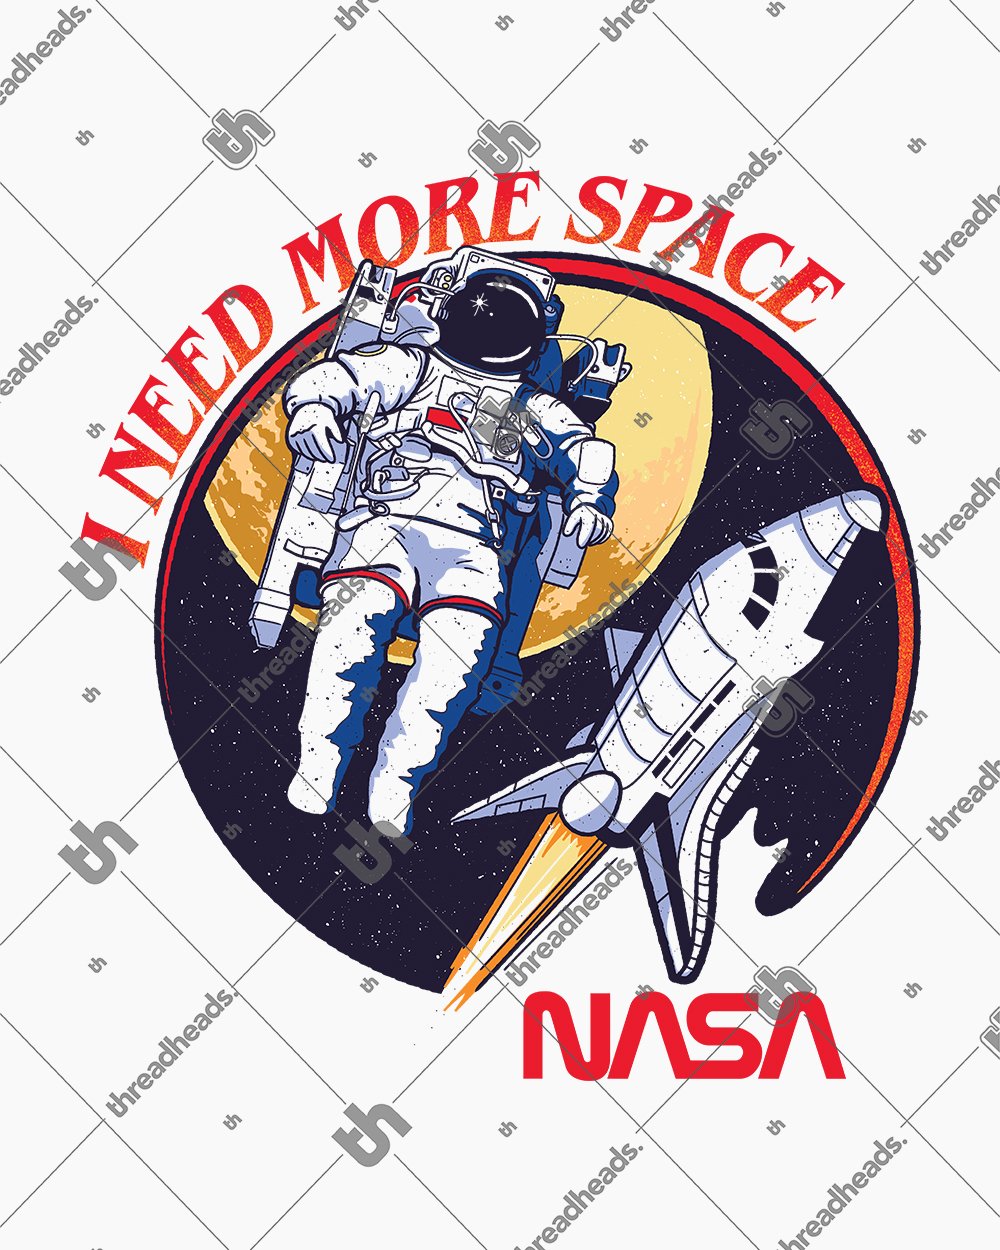 NASA I Need More Space Long Sleeve Australia Online #colour_white